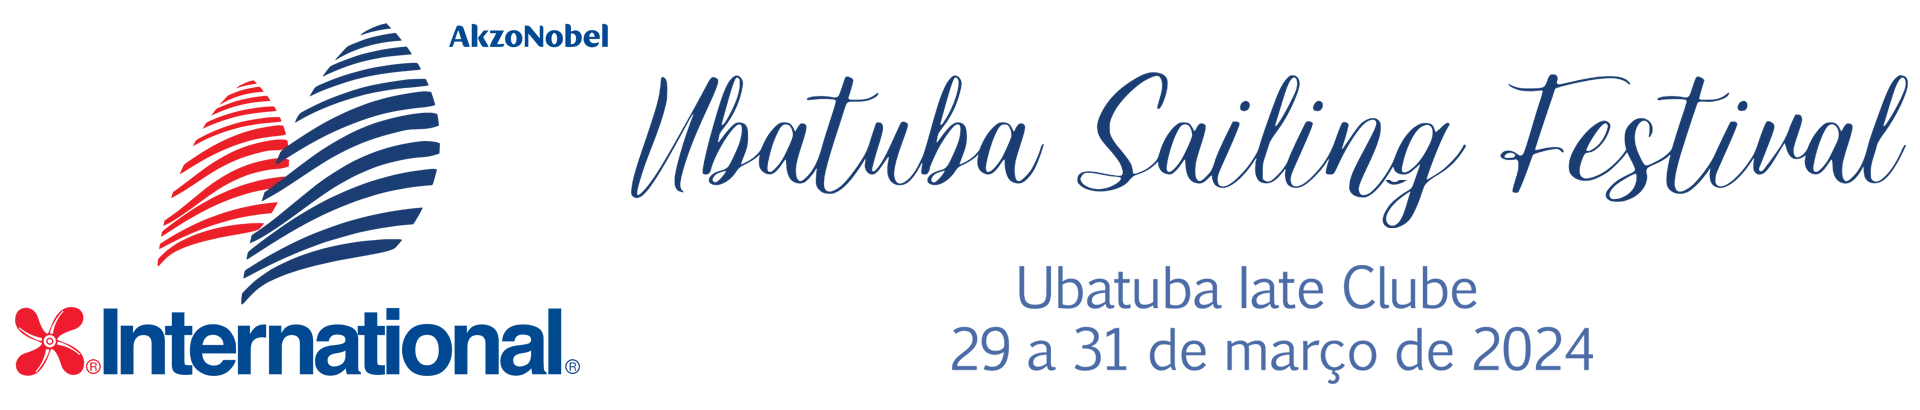 Ubatuba Sailing Festival